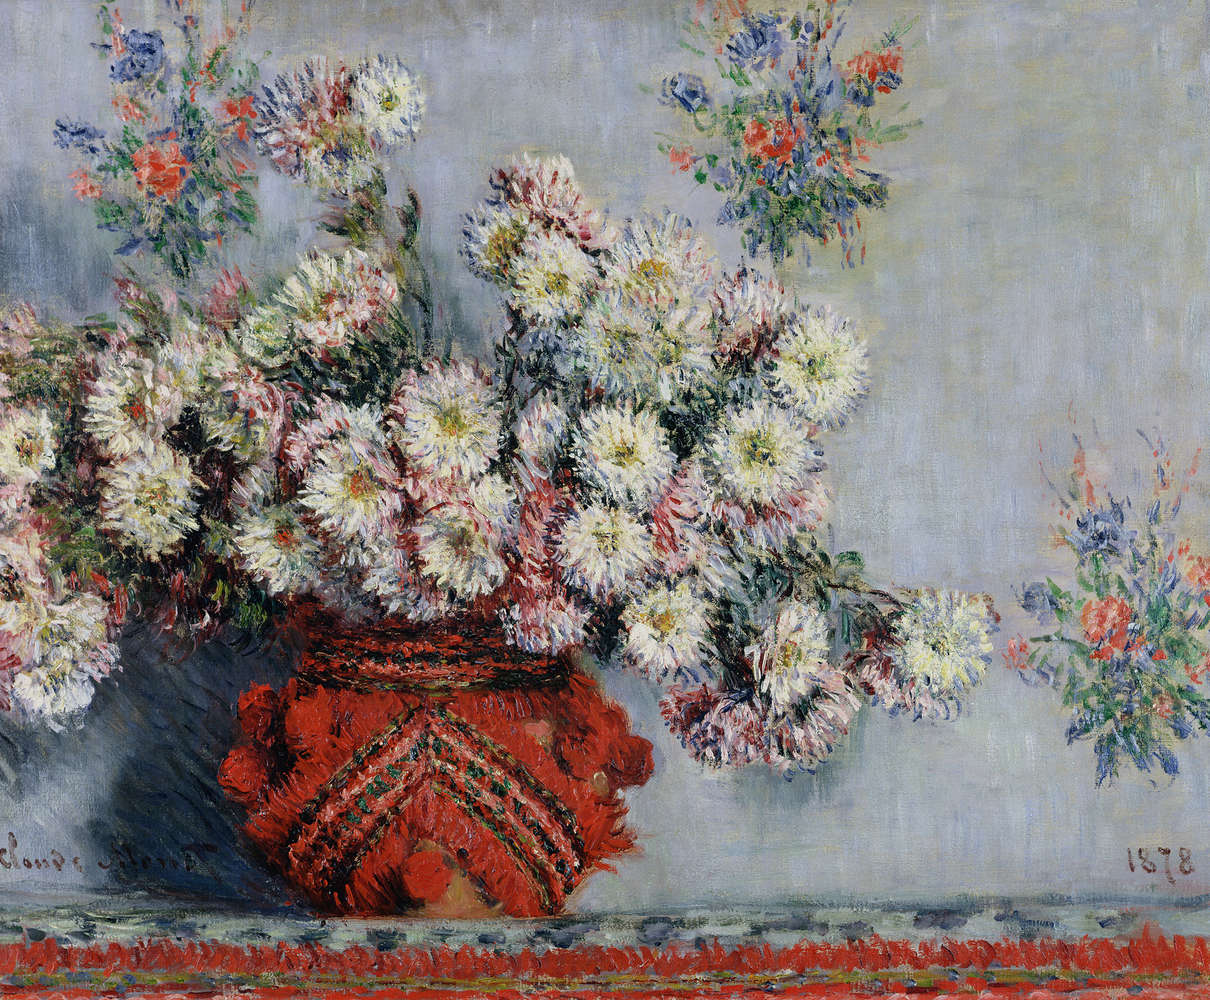             Photo wallpaper "Chrysanthemums" by Claude Monet
        